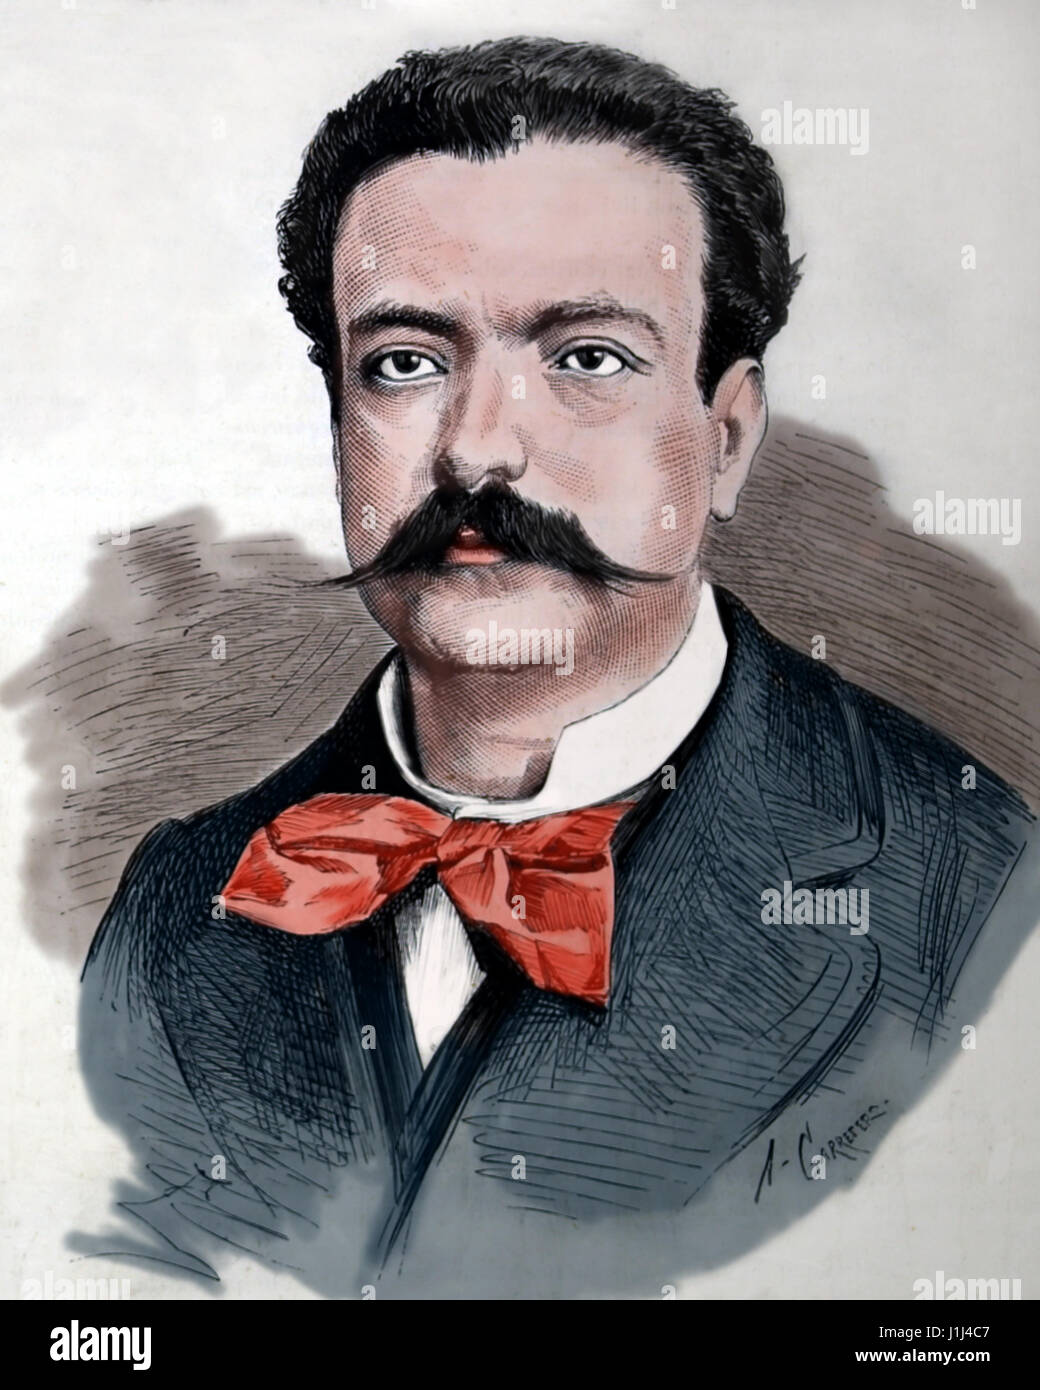 Antonio Vico (1840-1902).  Spanish actor. Engraving by Antonio Carretero, 1875, The Spanish and American Illustration. Stock Photo